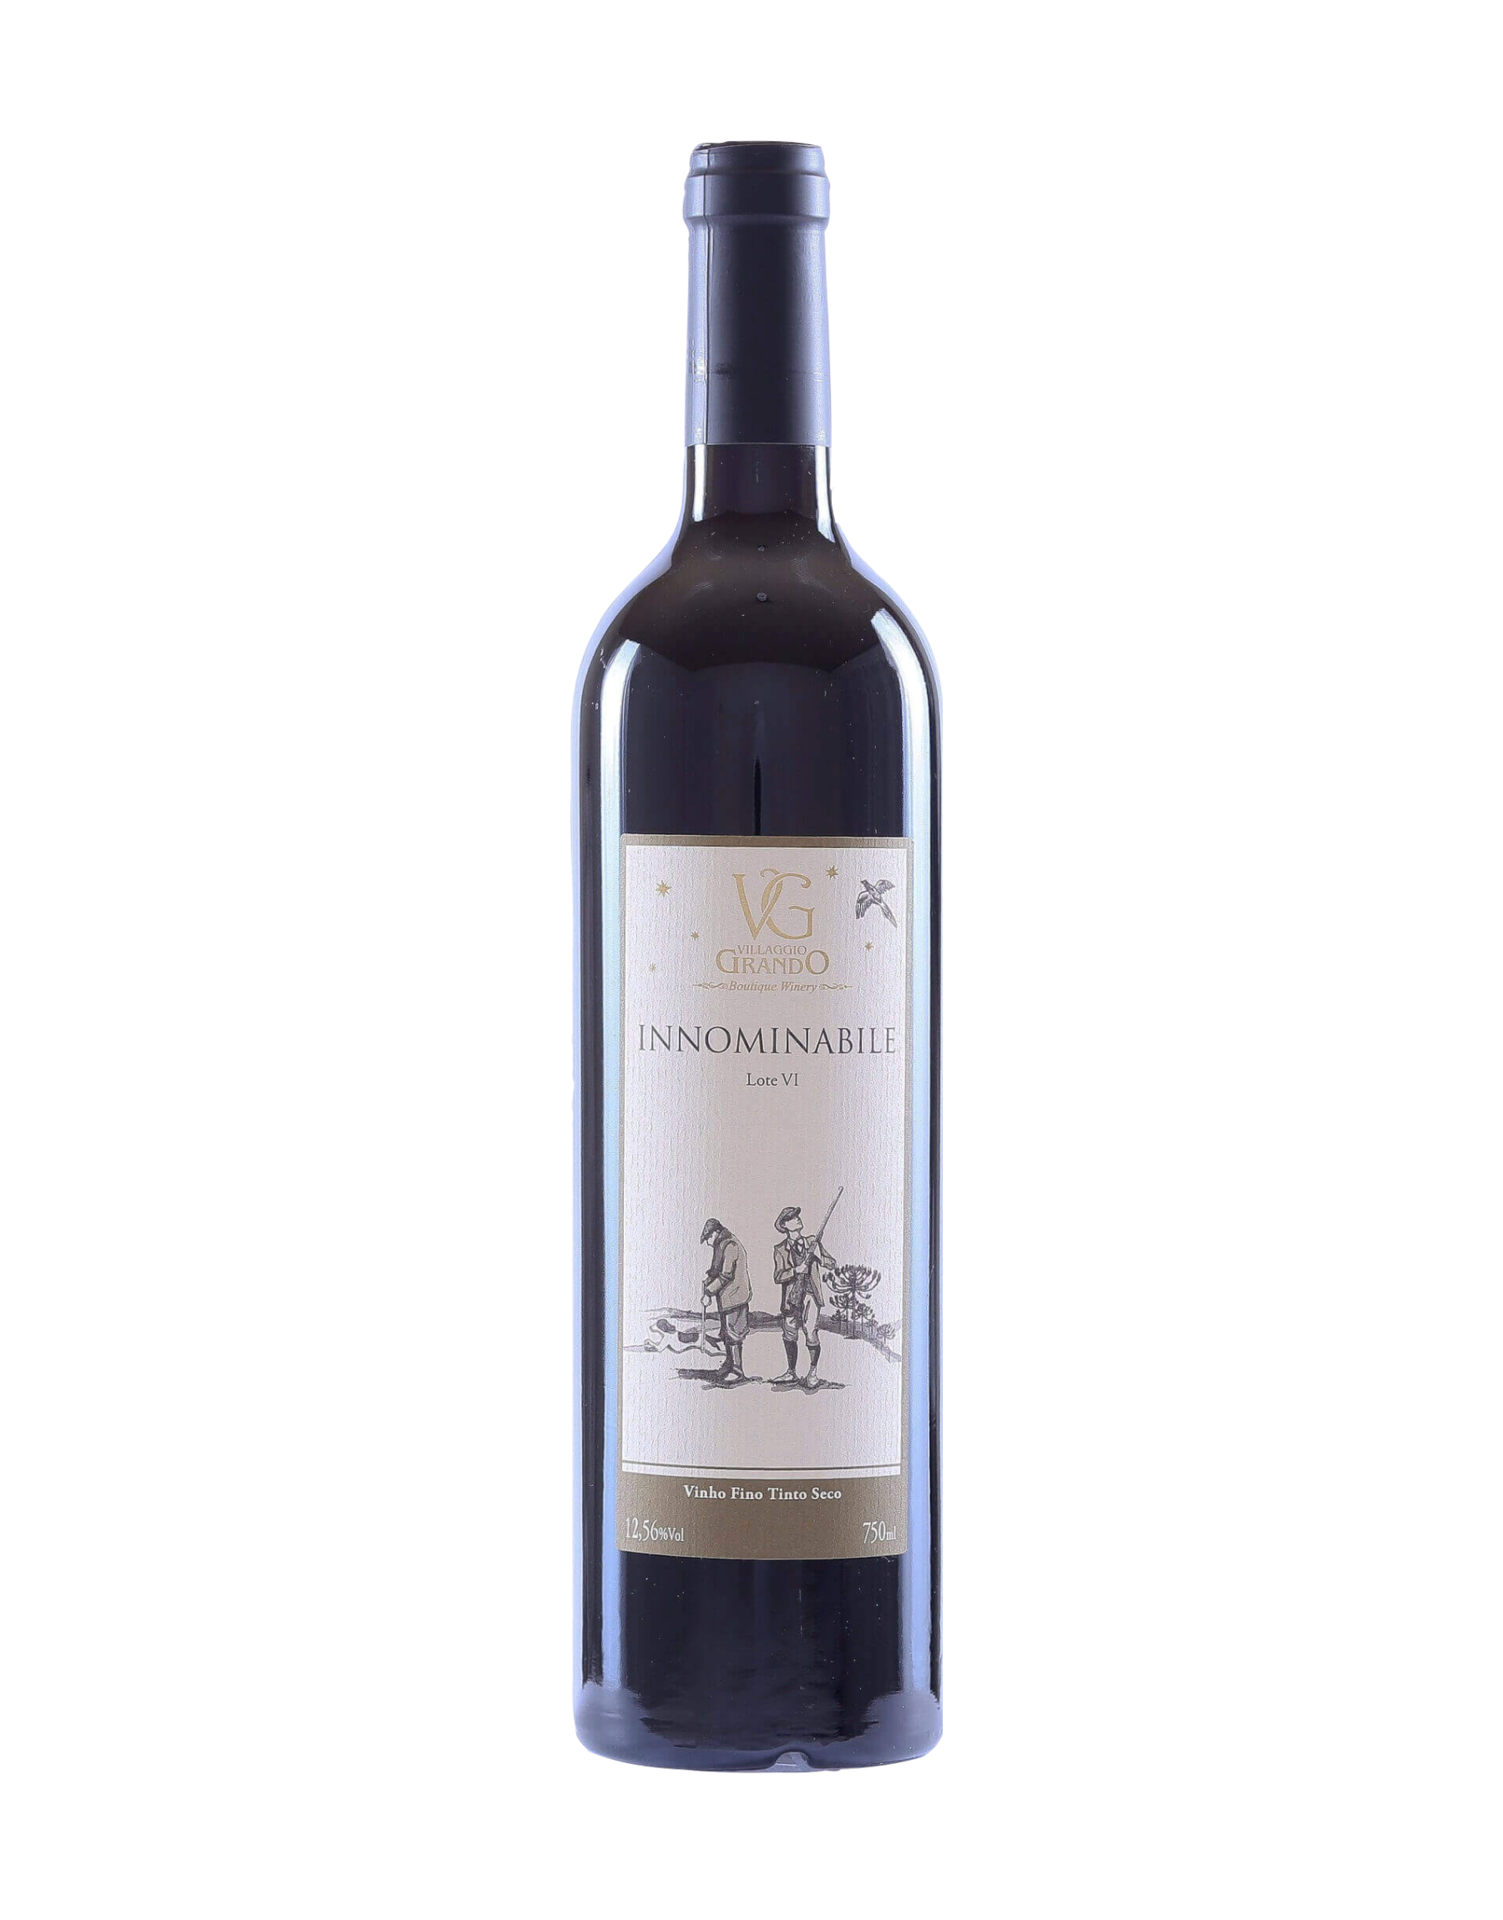 Vinho Villaggio Grando - Innominabile -Tinto Seco - inot Noir, Cabernet Sauvignon, Merlot, Petit Verdot, Marselan, Cabernet Franc, Malbec - 750 ml